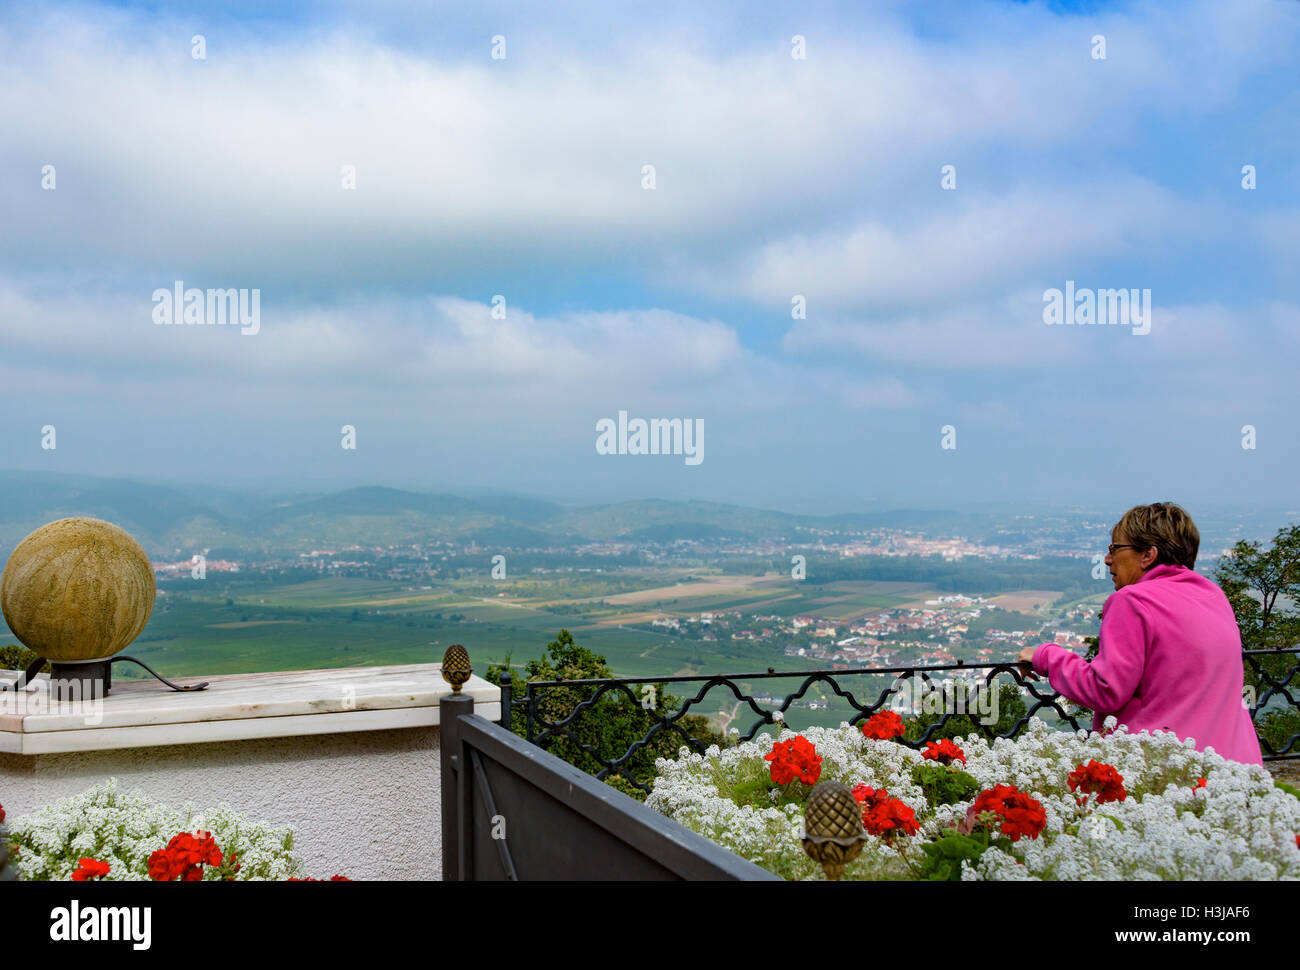 Overlooking the Wachau valley. Stock Photo